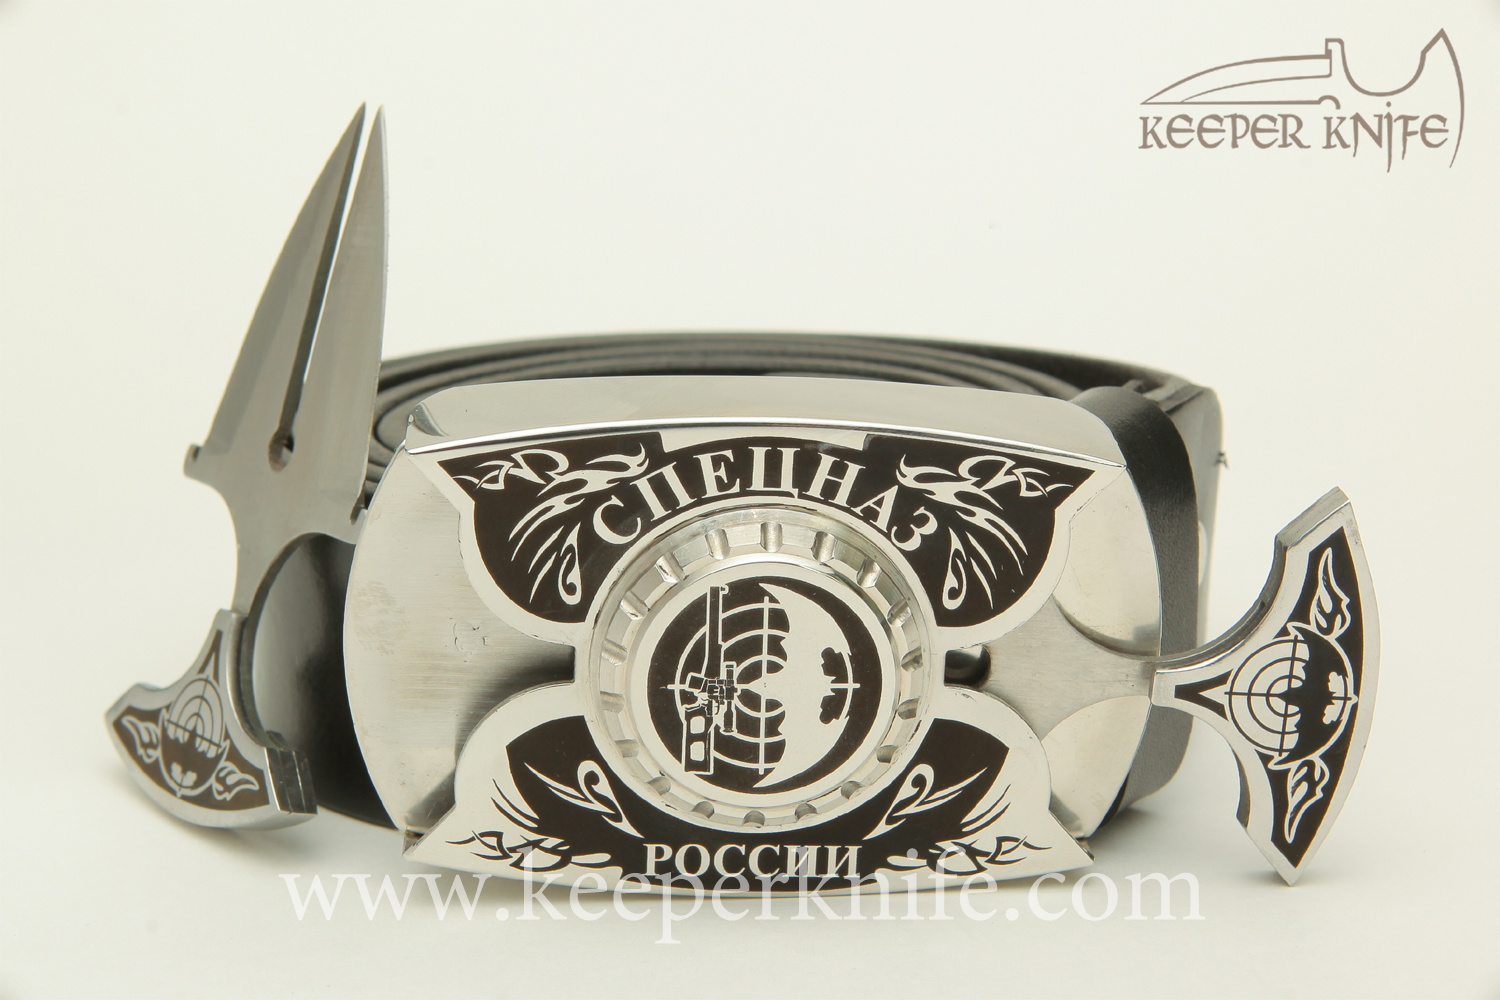 Купить пряжку нож KeeperKnife:  Спецназ России (Серебро)